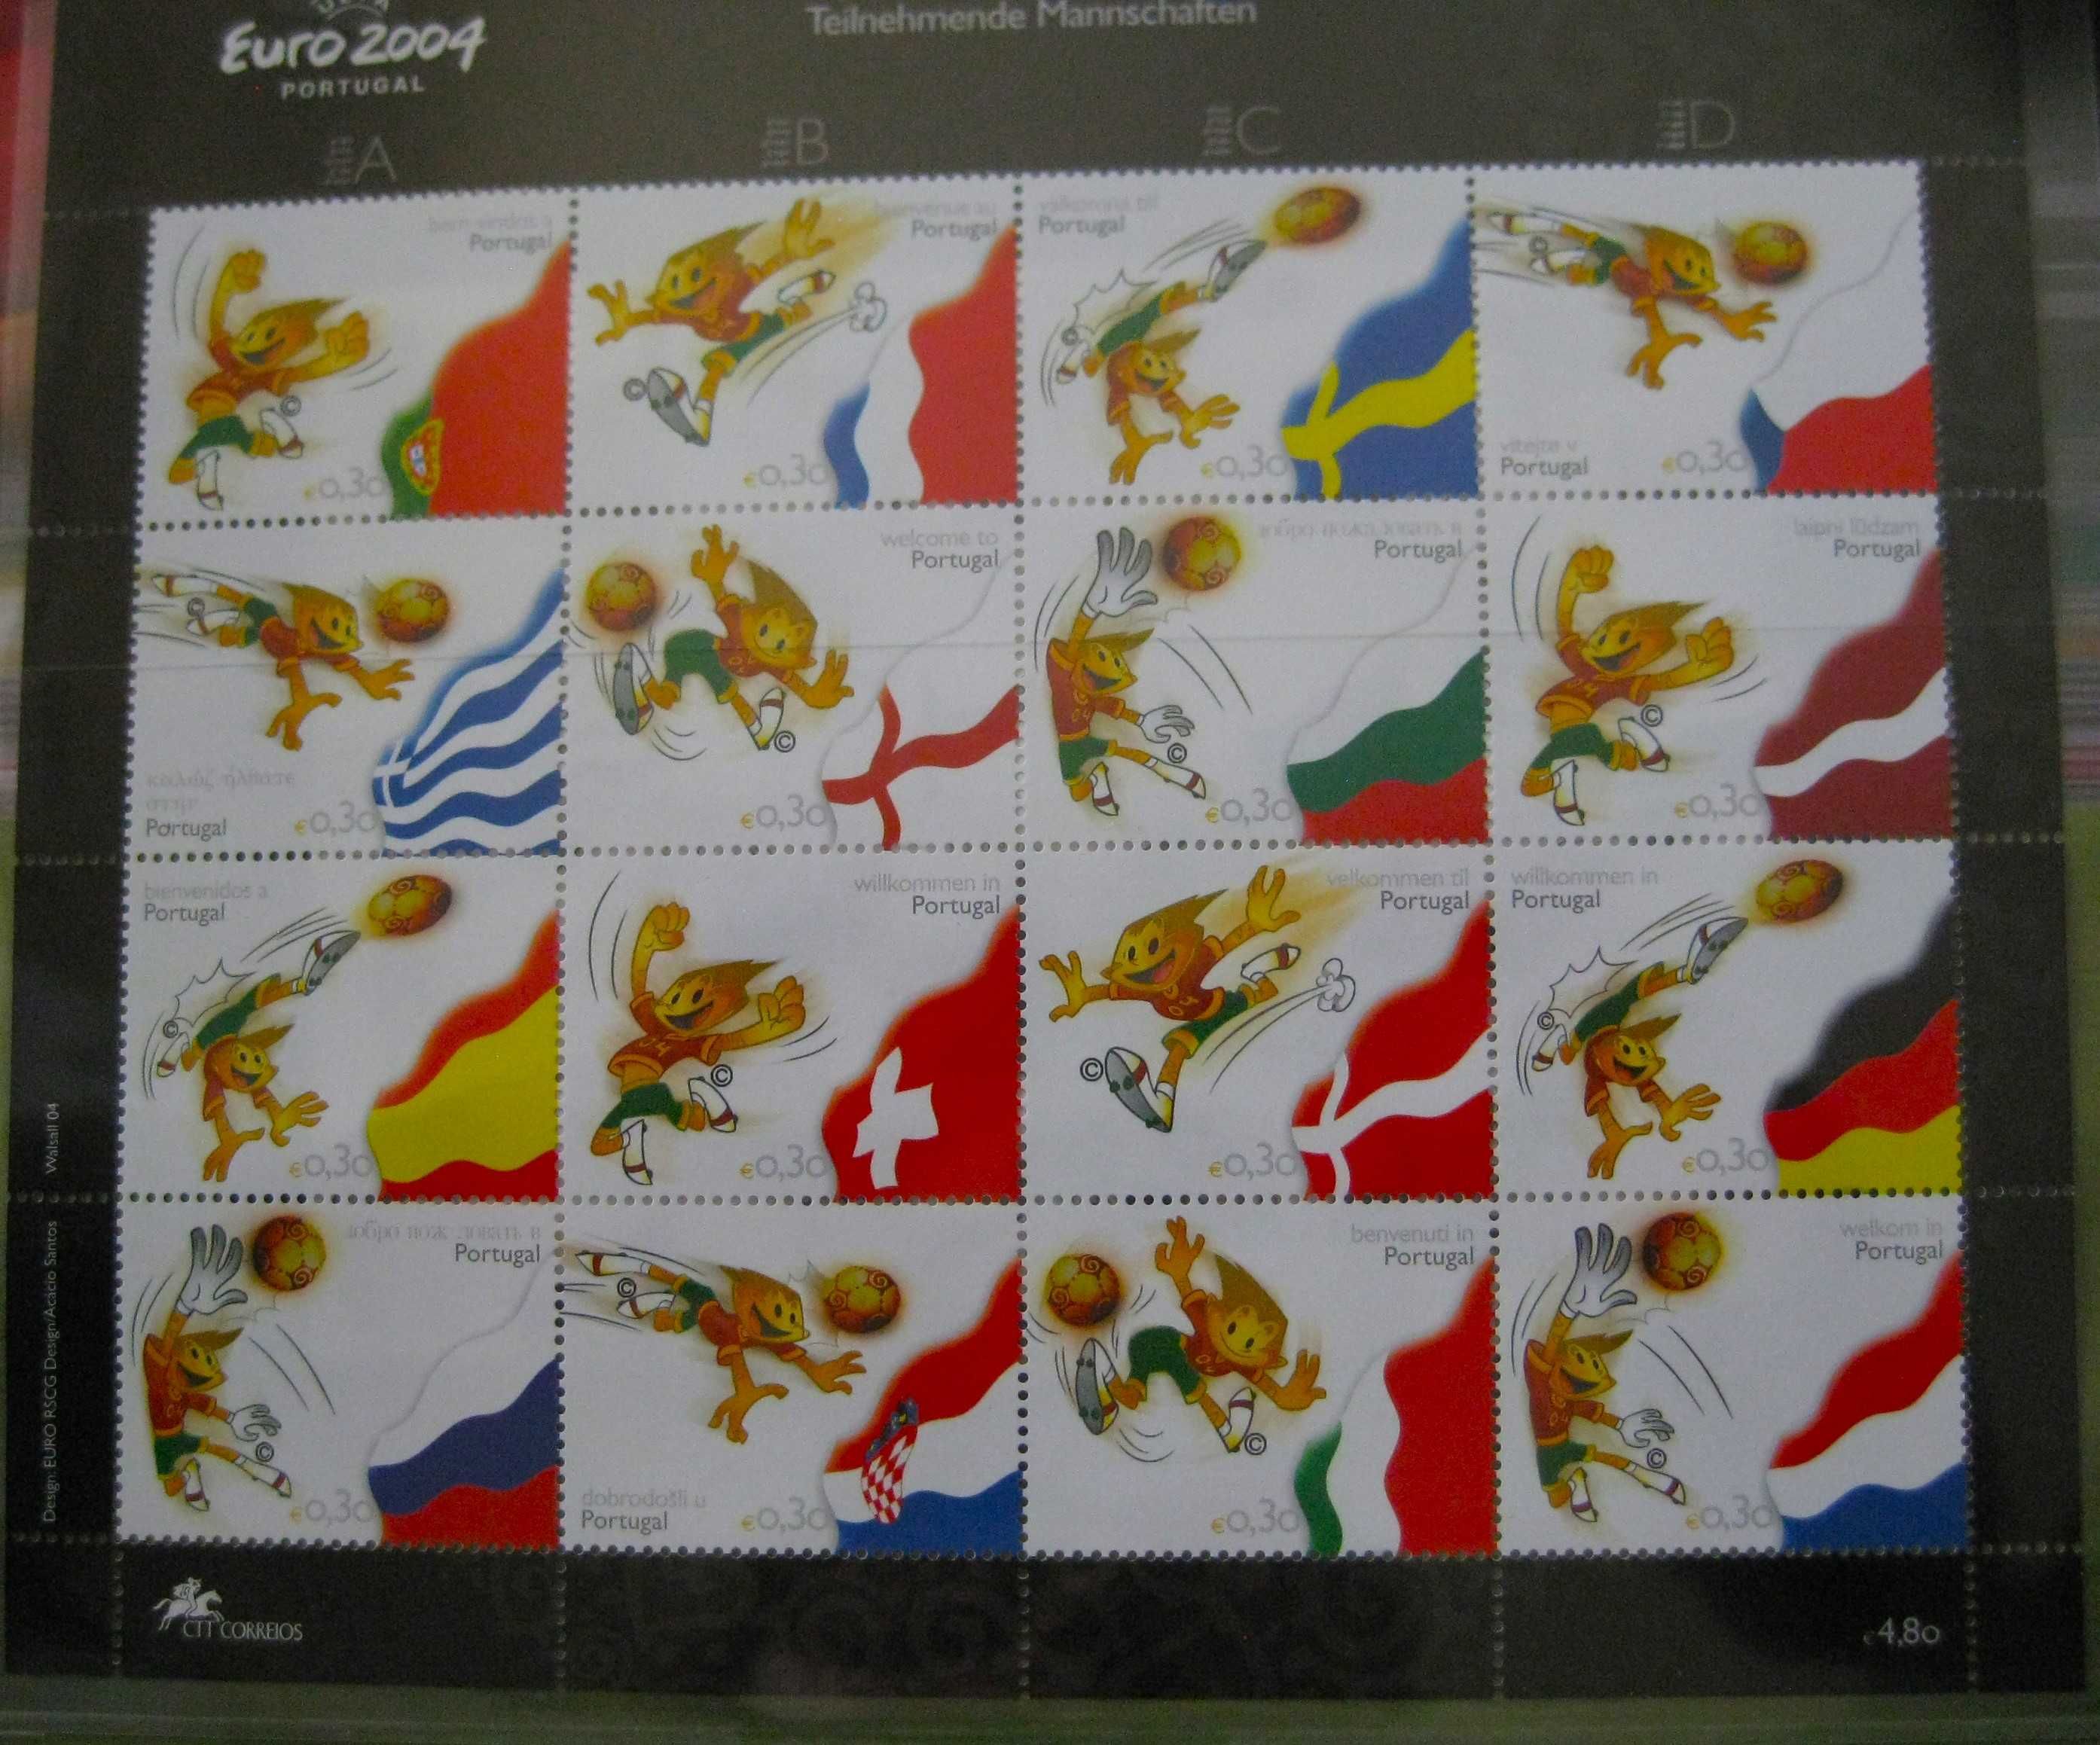 Carteira de Selos Euro 2004 c/ Selos e Fechada